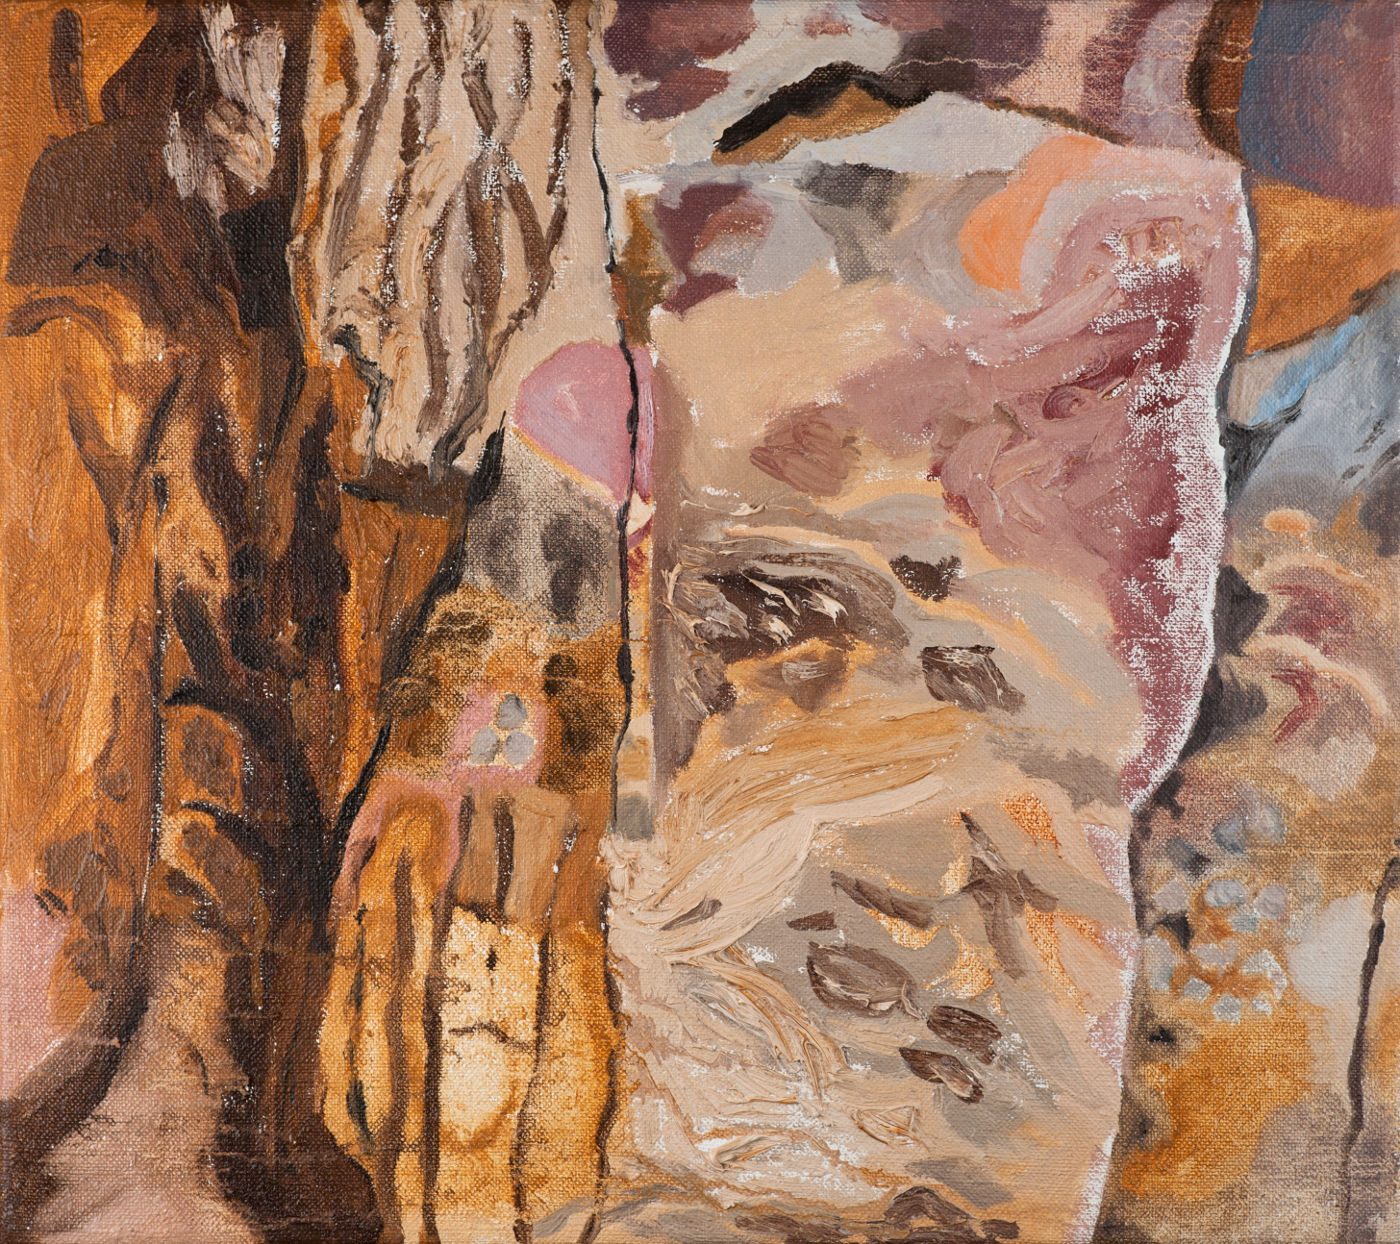 Jan Karpíšek: The Portrait of Mr. Píro's Rock, oil on canvas, 40x45 cm, 2012